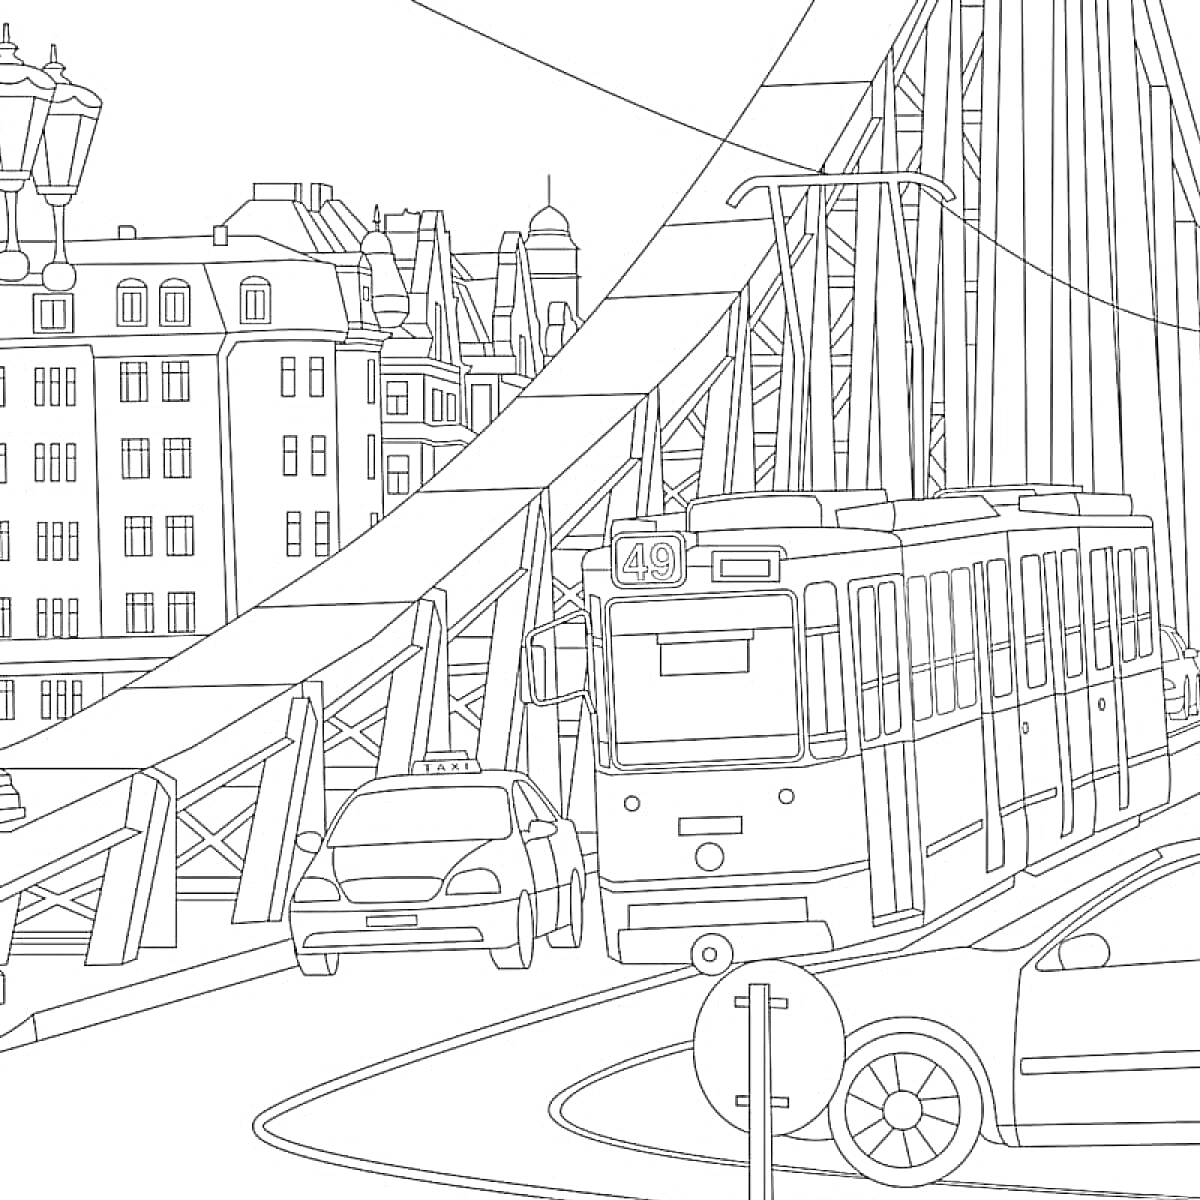 На раскраске изображено: Мост, Трамвай, Такси, Здания, Фонари, Архитектура, Авто, Города, Дороги, Улицы